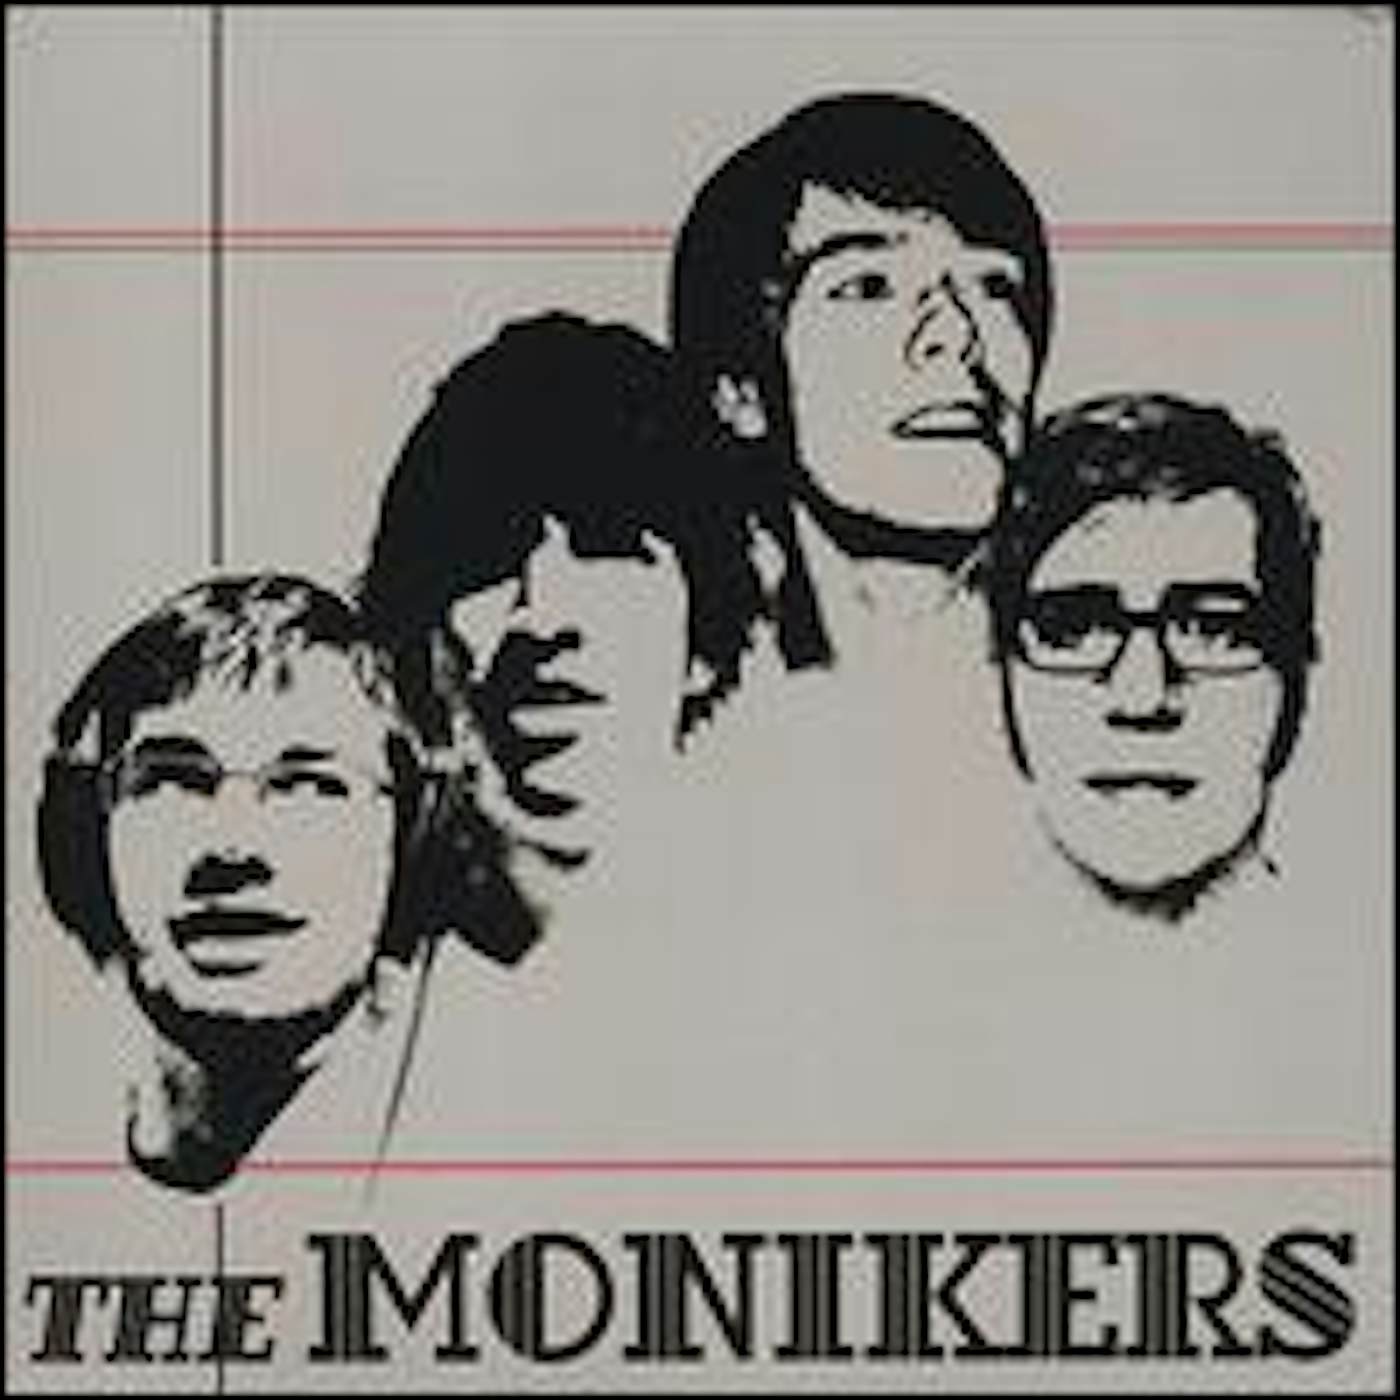 The Monikers CD